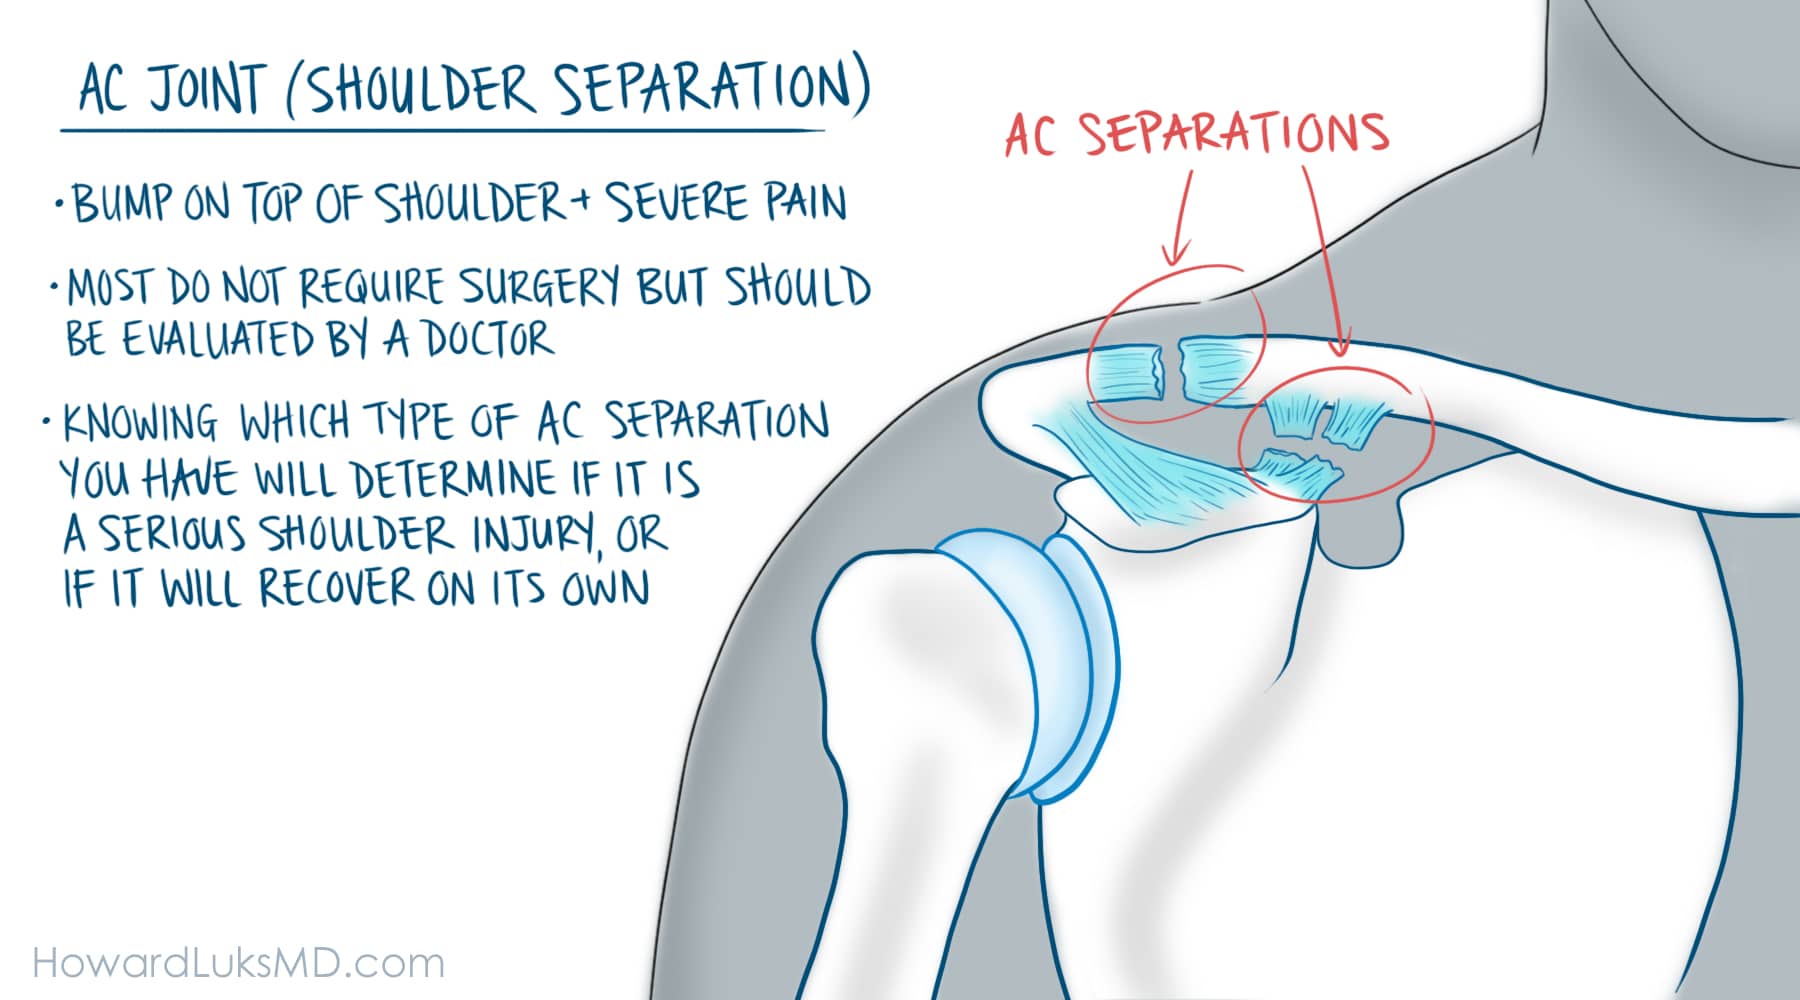 AC separations severe shoulder injury howard luks md